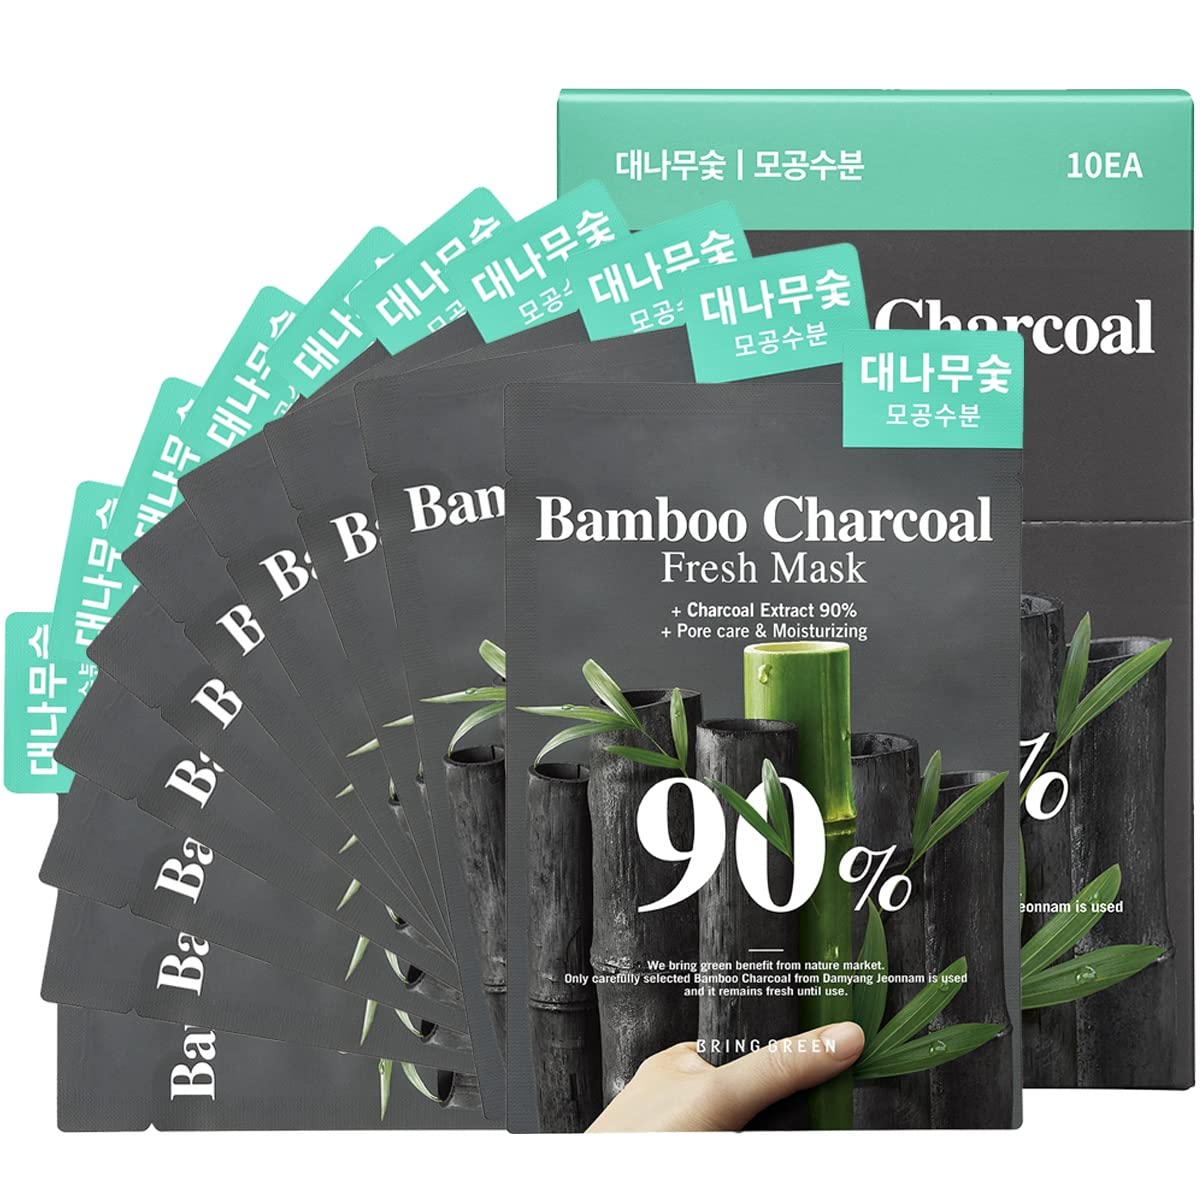 Bring Green Bamboo Charcoal 90% Fresh Mask Beauty Bring Green 10 pack  